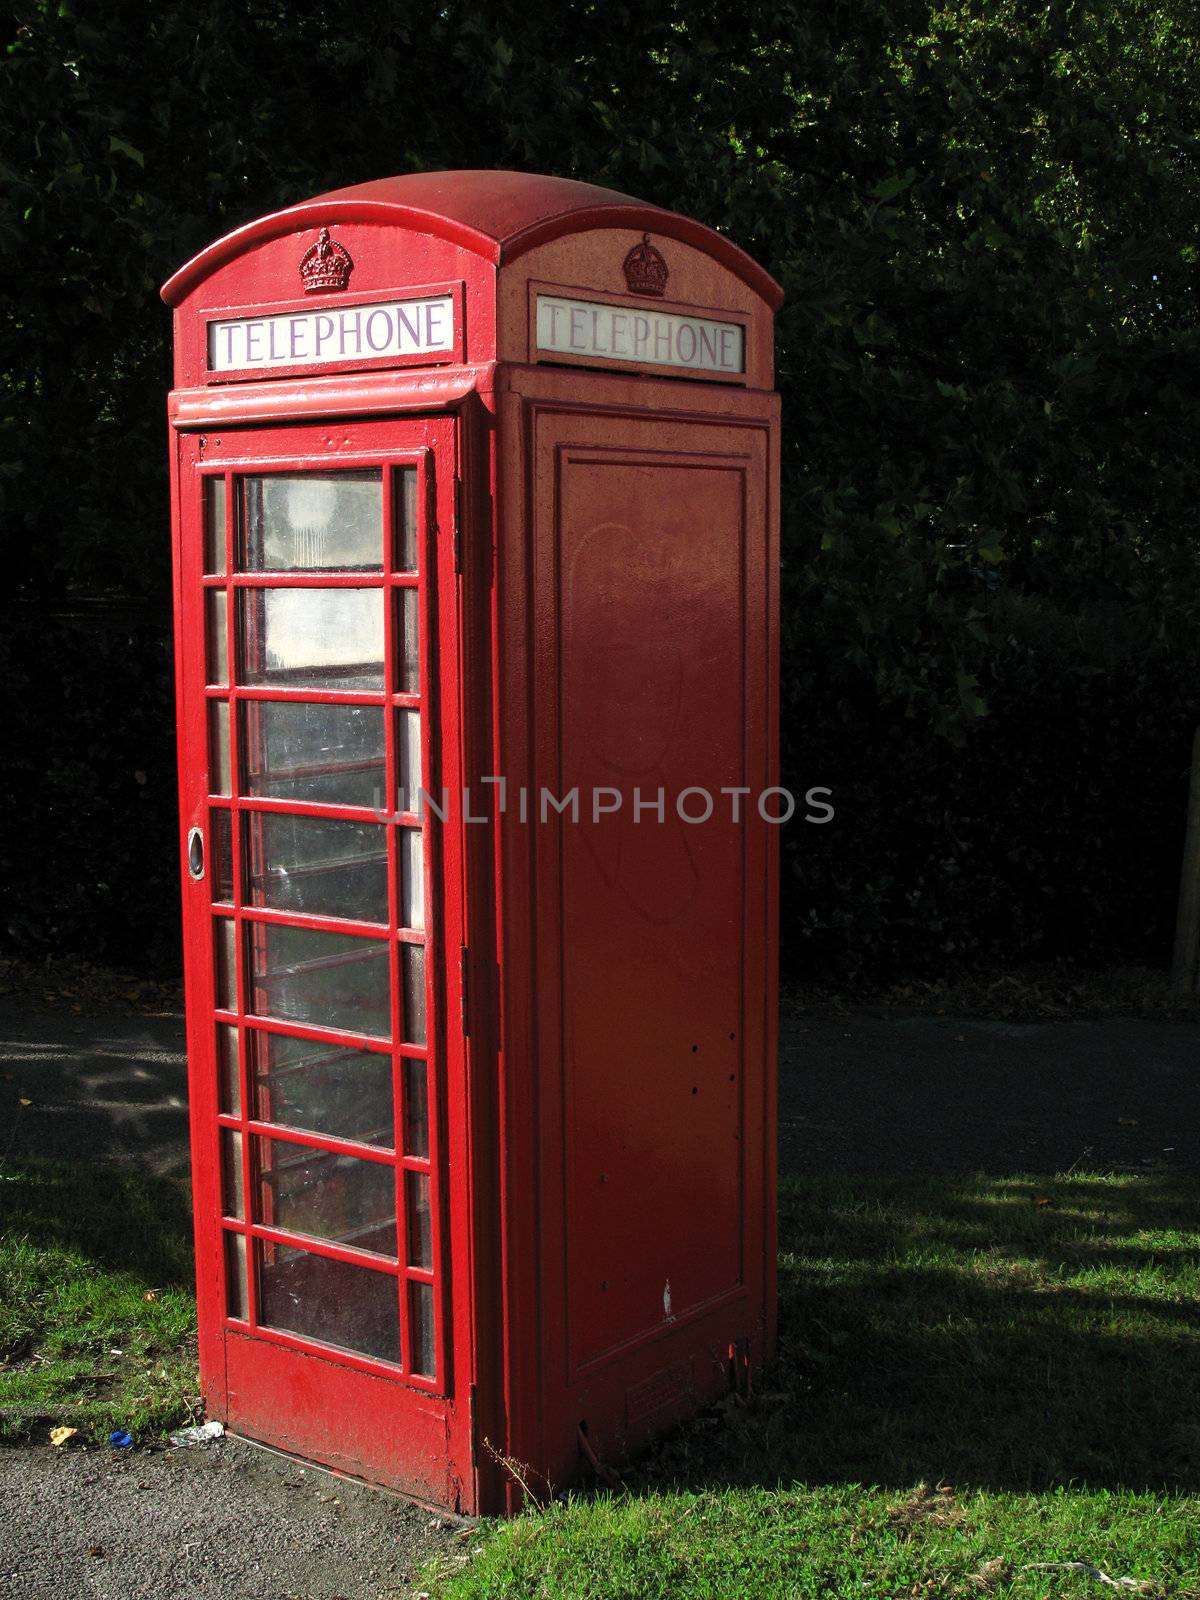 Traditional British telephone kiosk in urban setting